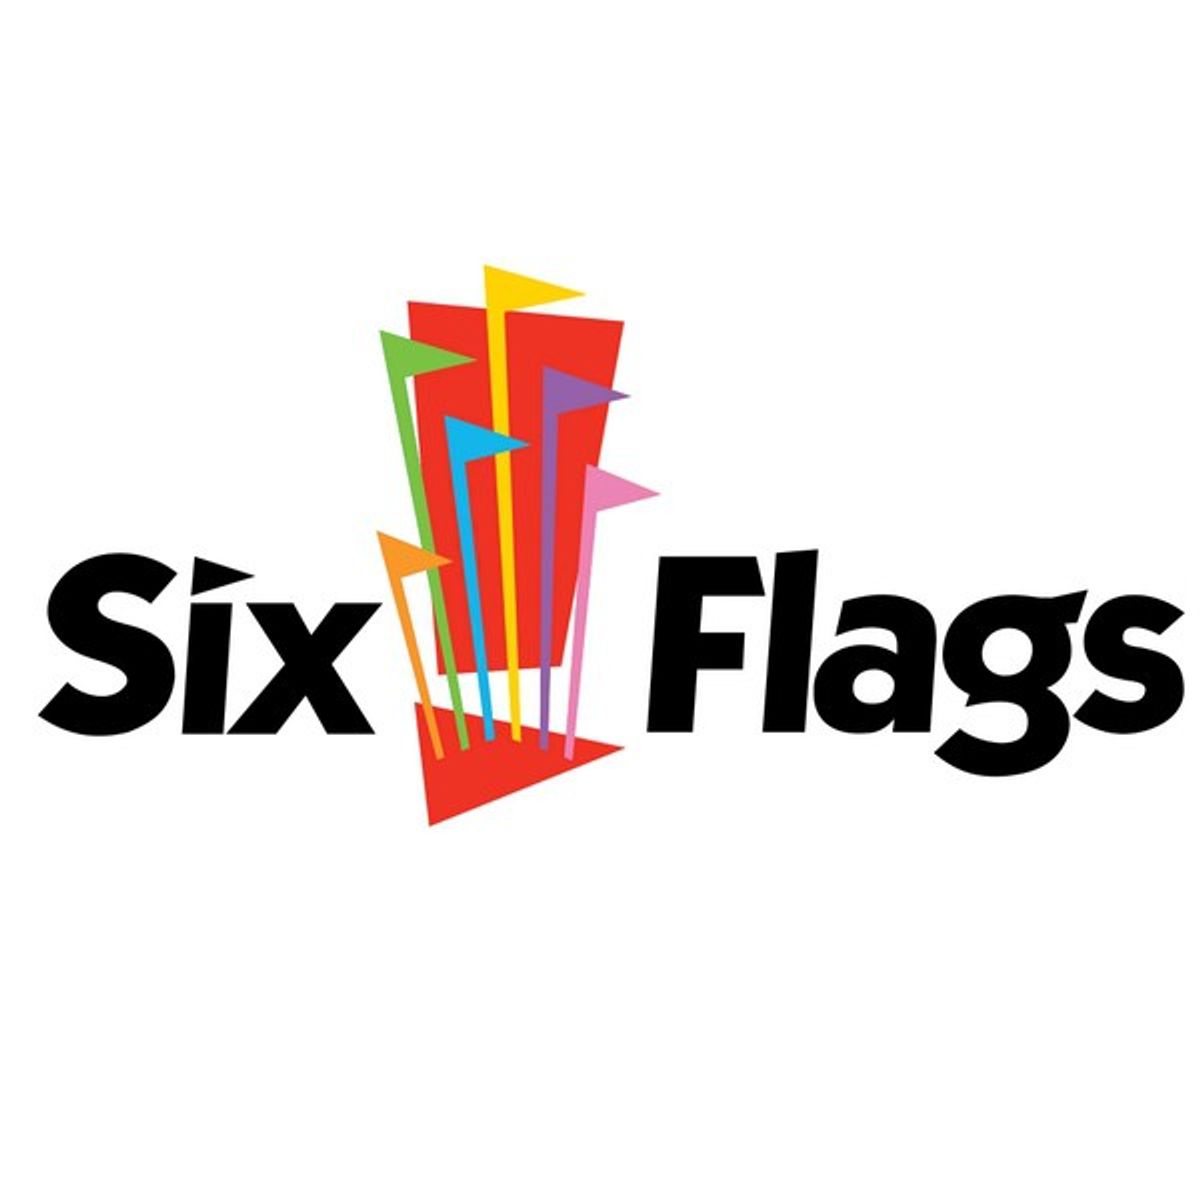 Why I Am Boycotting Six Flags